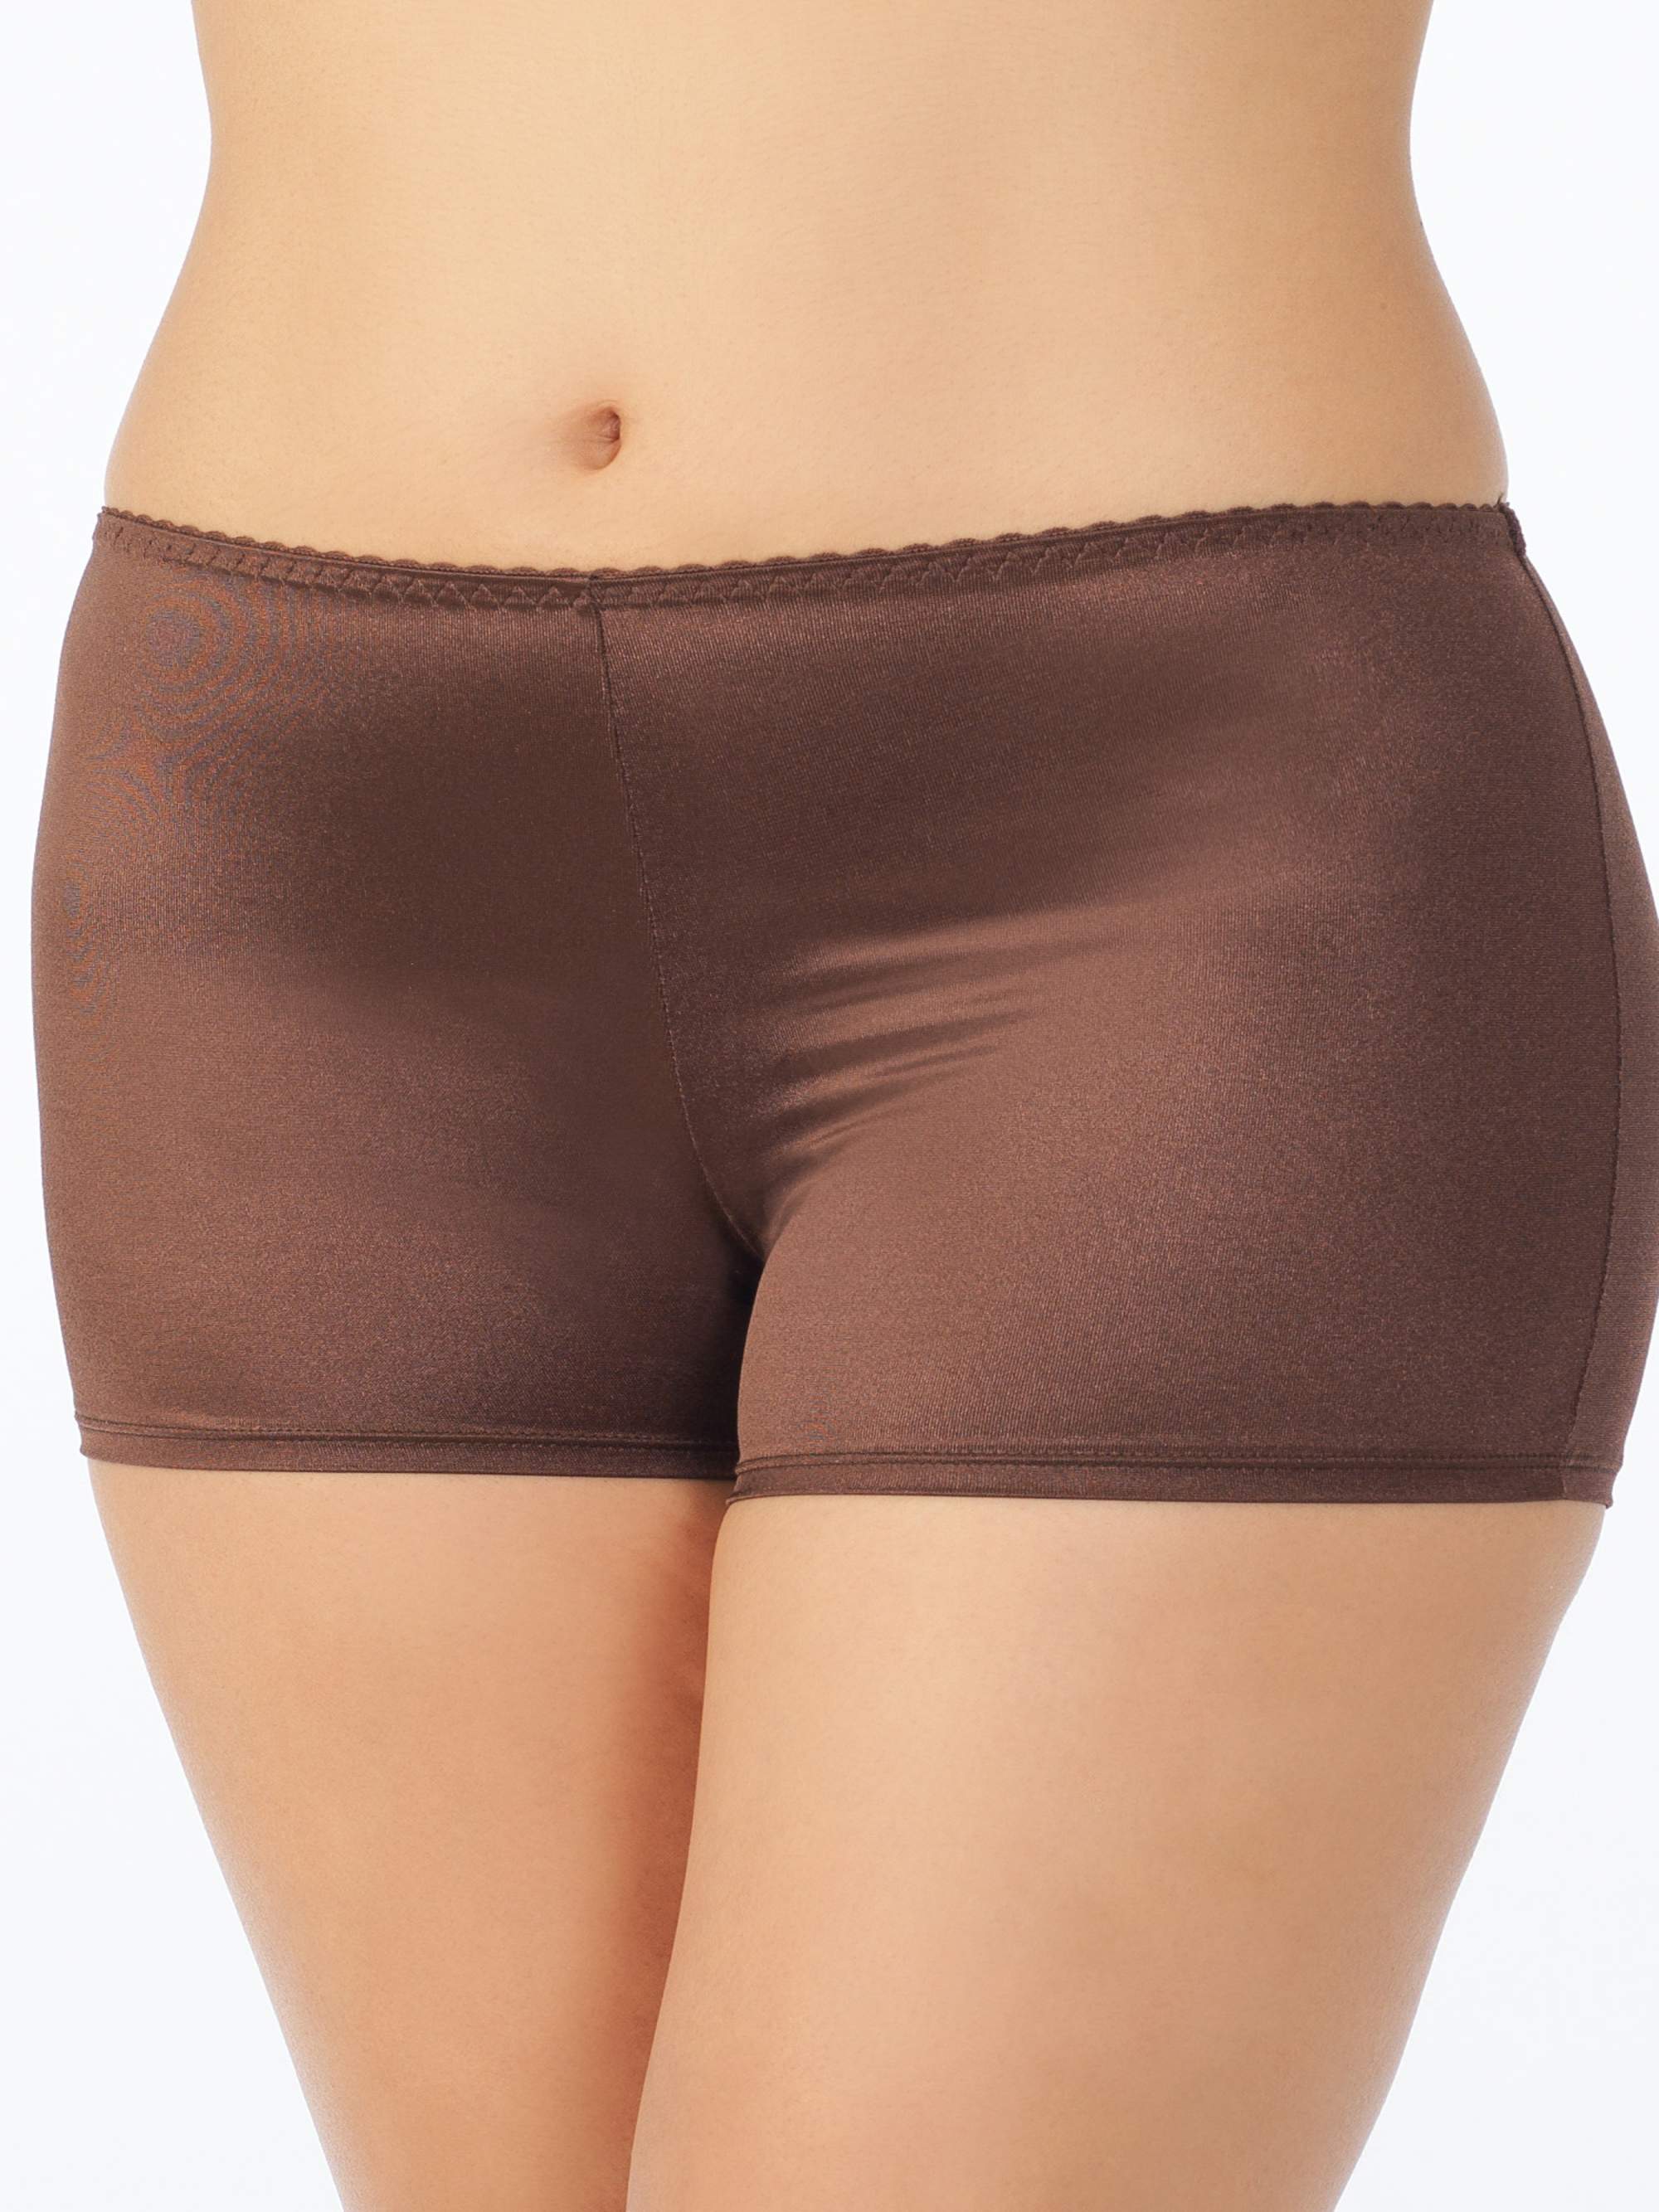 Women's Undershapers Light Control Boy Short Panty, Style 4842001 - image 1 of 2